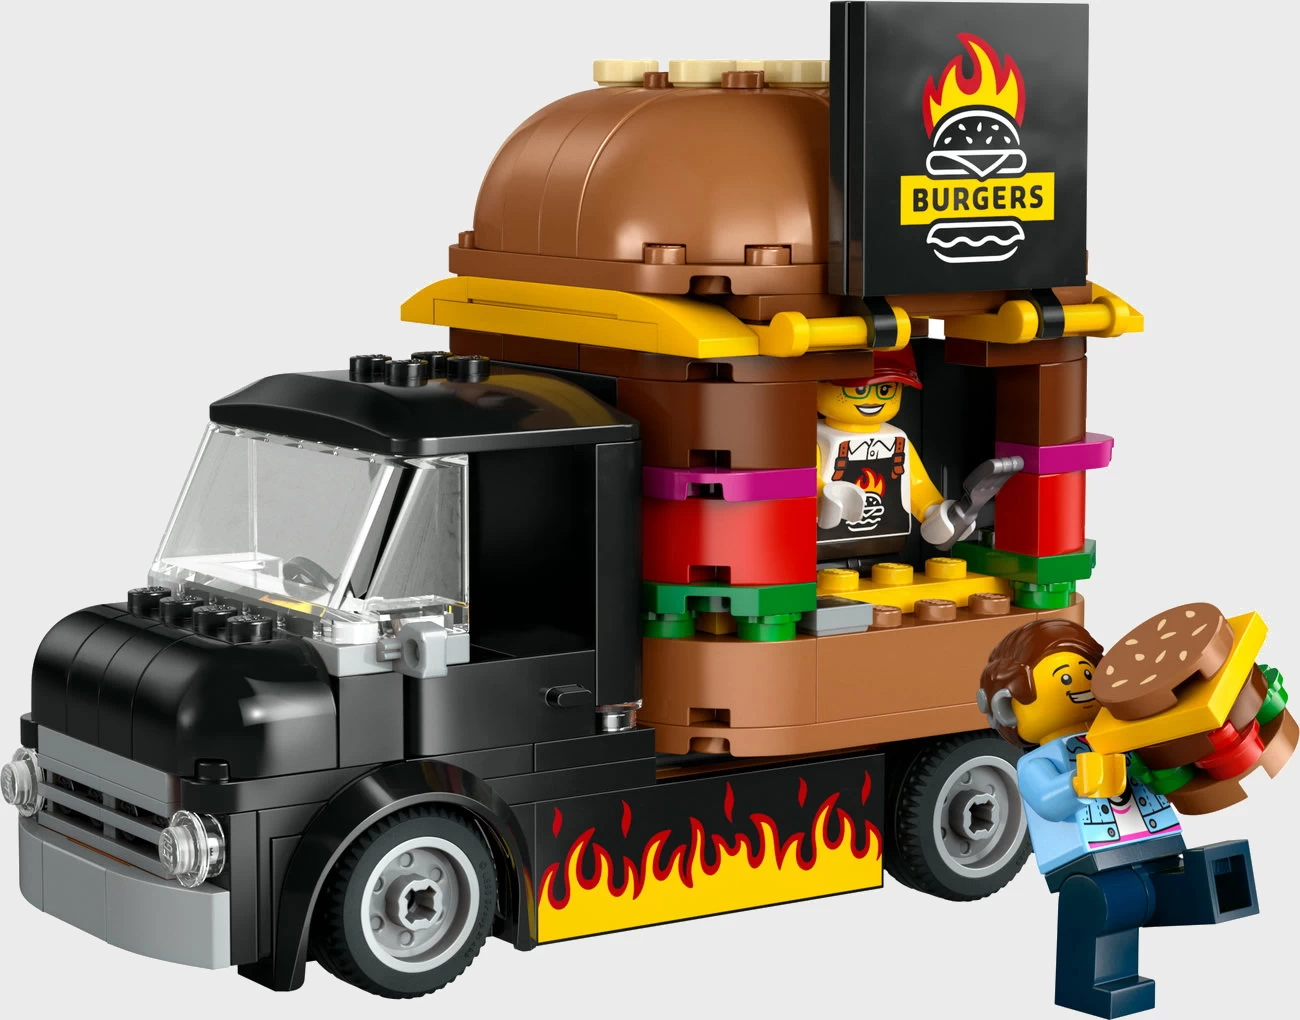 LEGO City 60404 - Burger-Truck